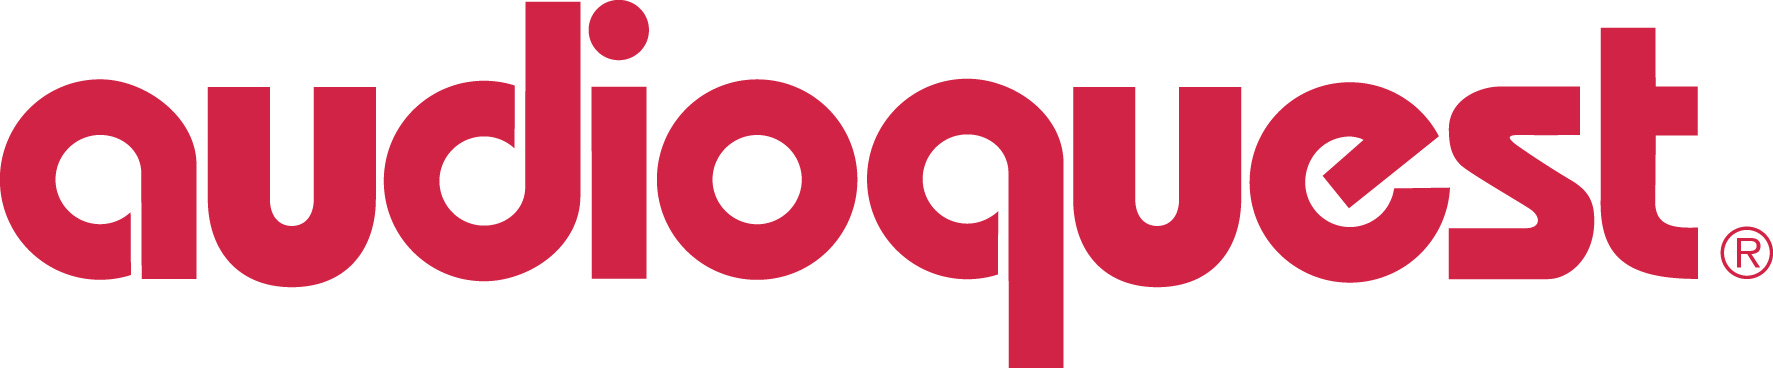 AQ-logo_PMS186